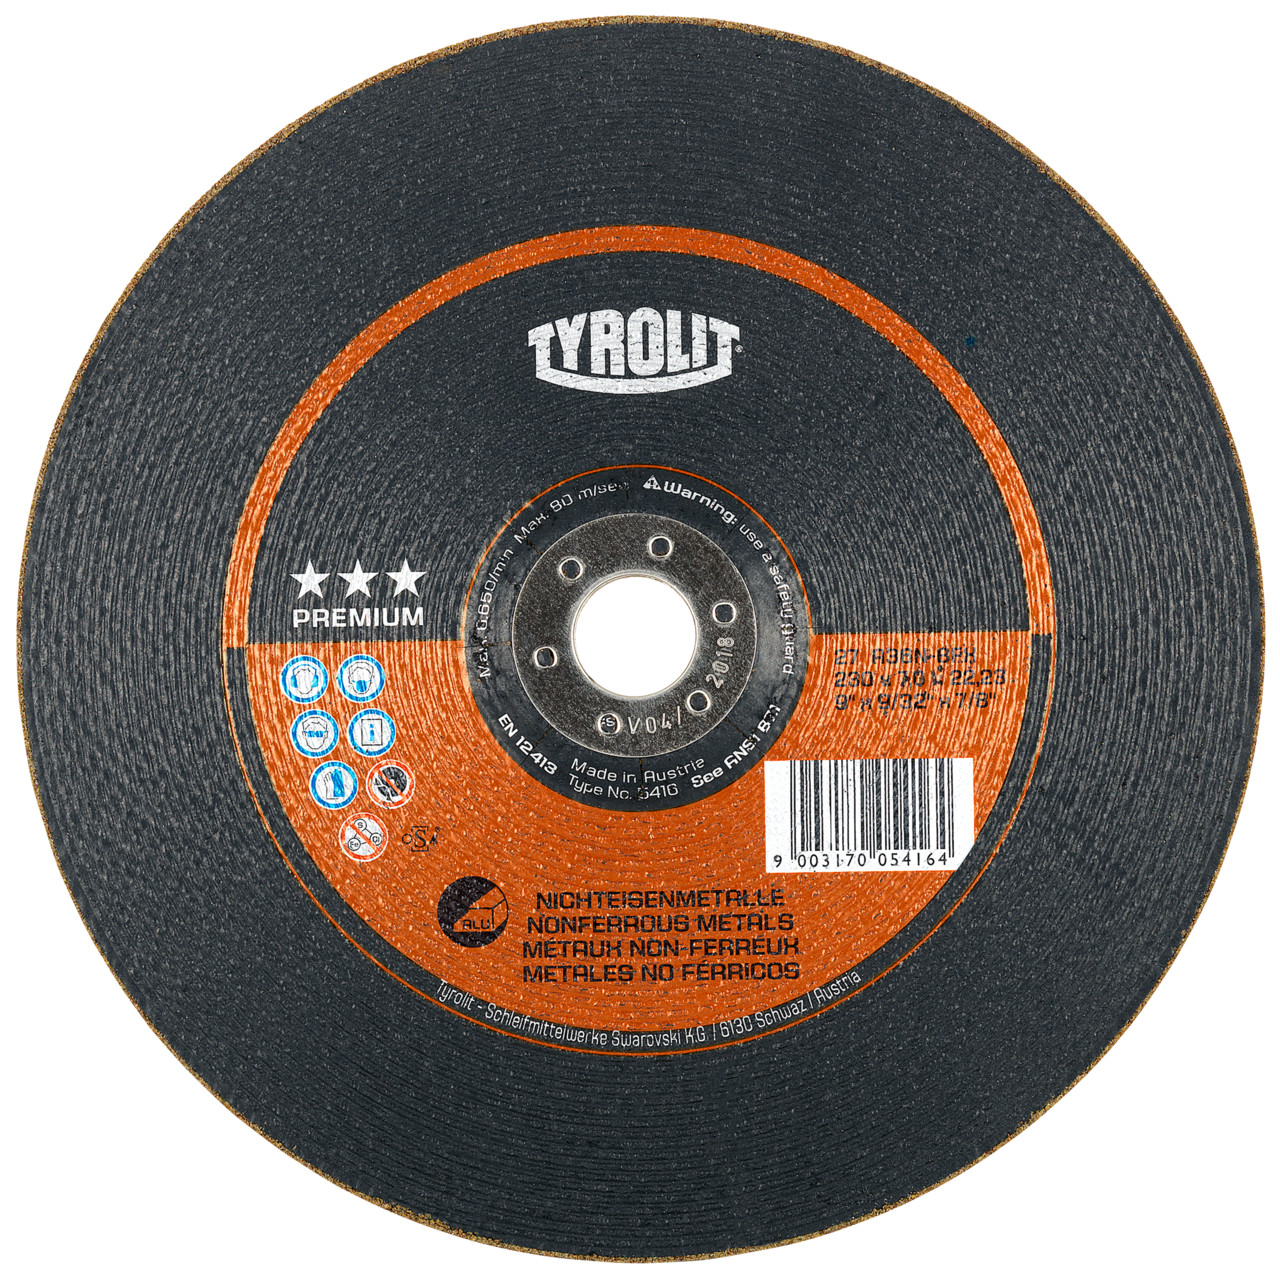 TYROLIT grinding wheel DxUxH 230x7x22.23 For non-ferrous metals, shape: 27 - offset version, Art. 647550